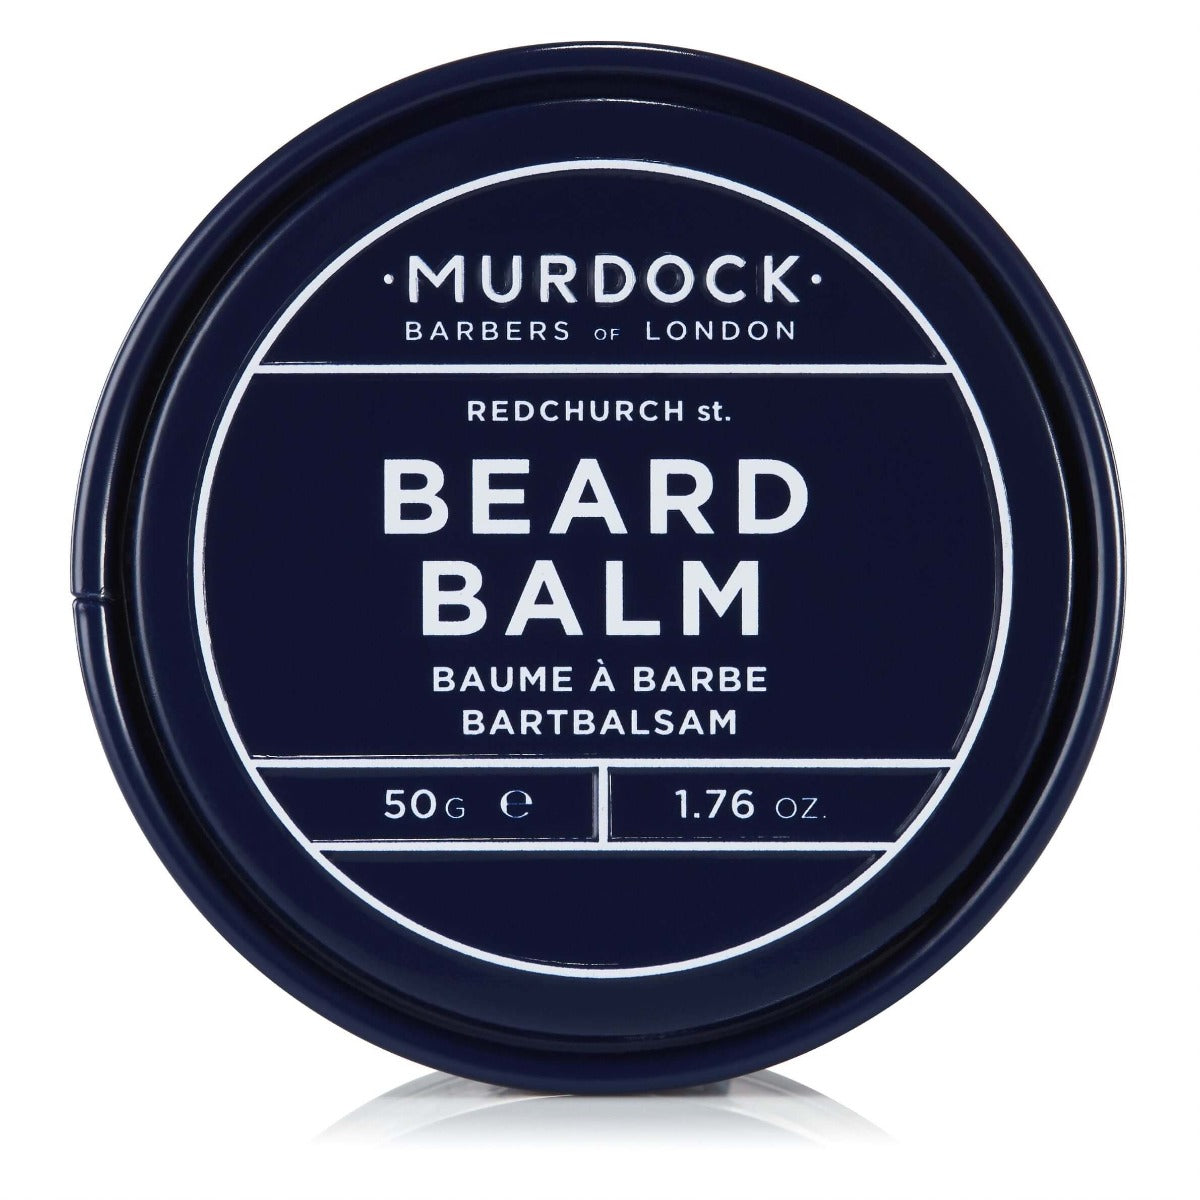 Murdock Beard Balm